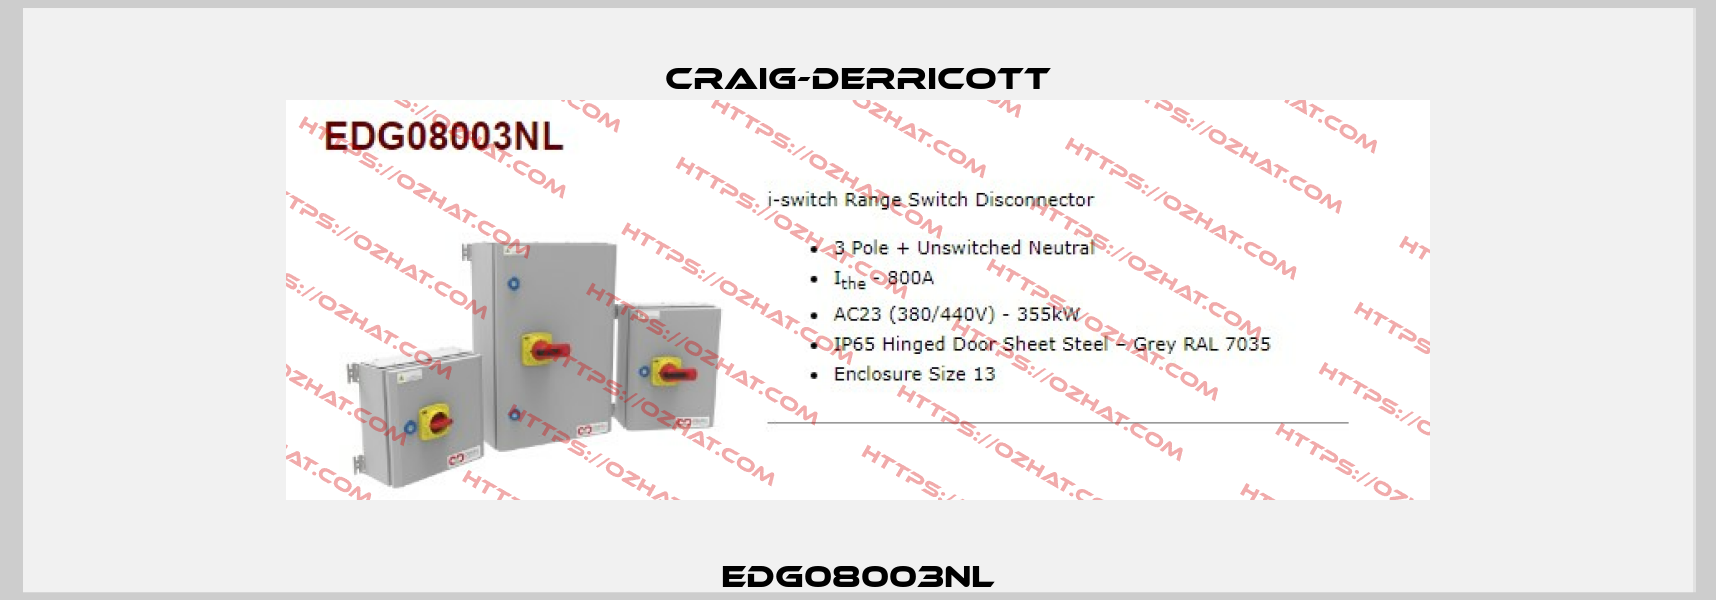 EDG08003NL Craig-Derricott